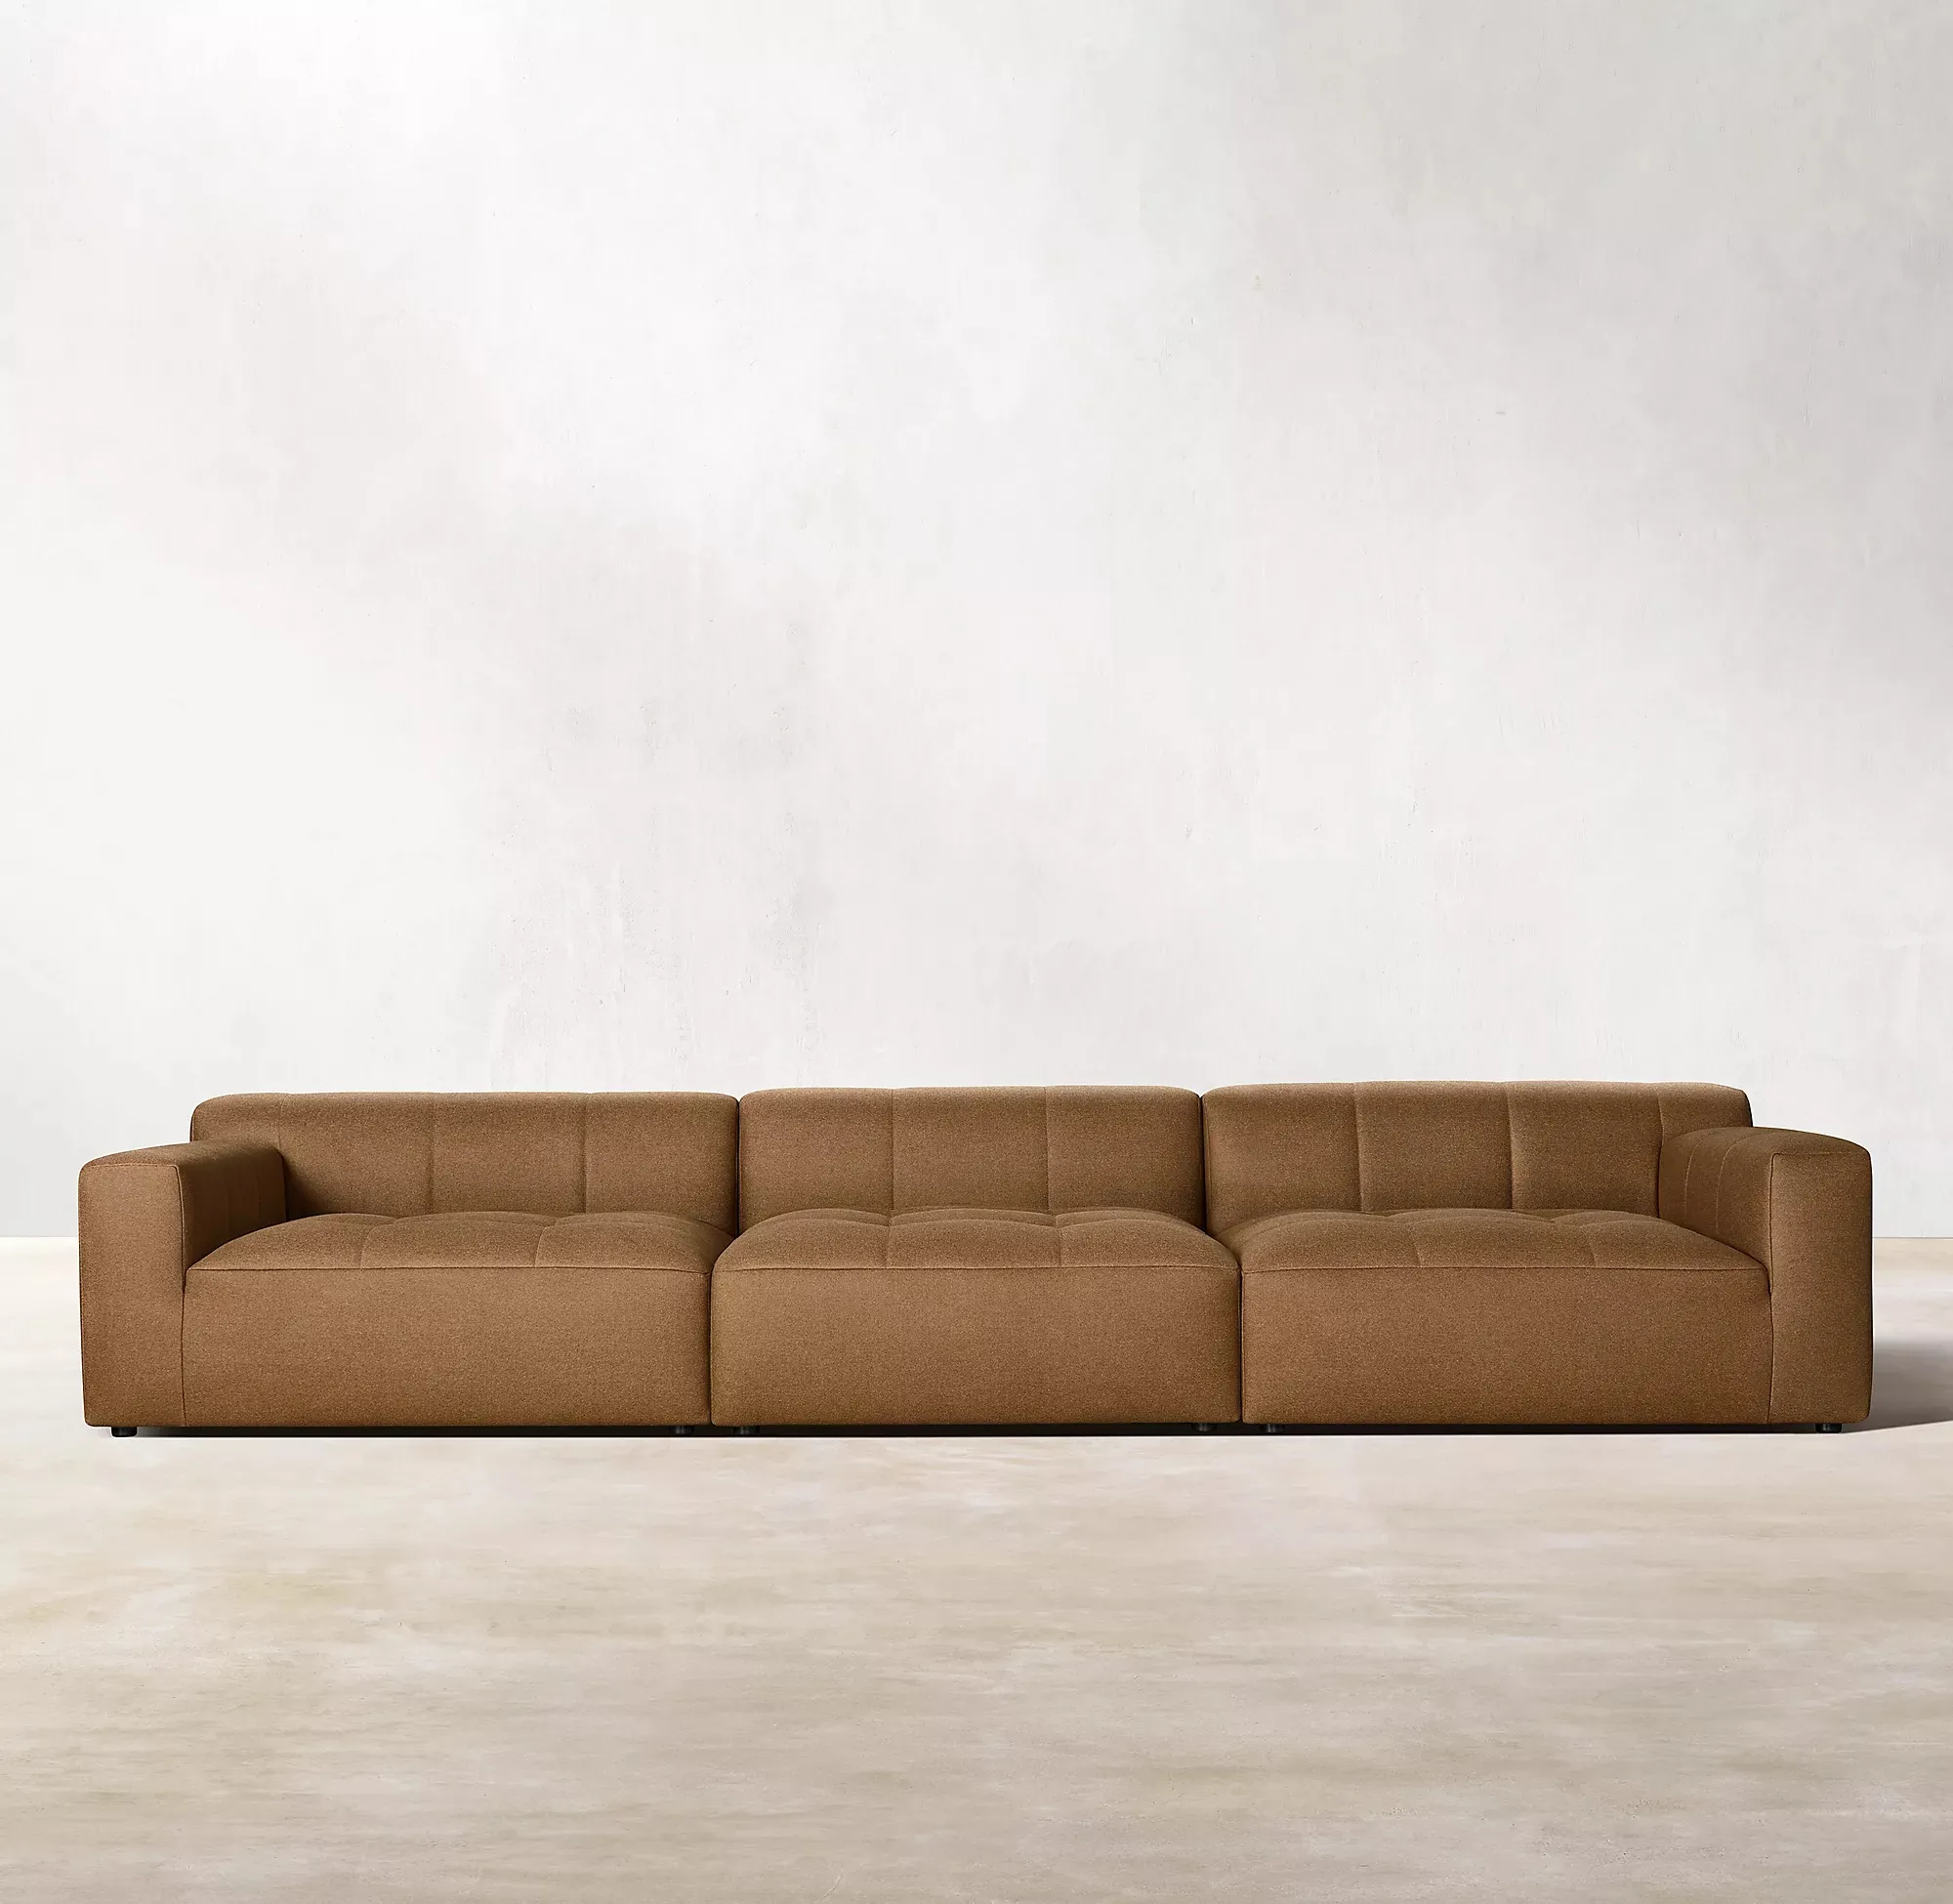 Living room furniture, deep seat, decorative style, sectional fabric, luxury sofa set